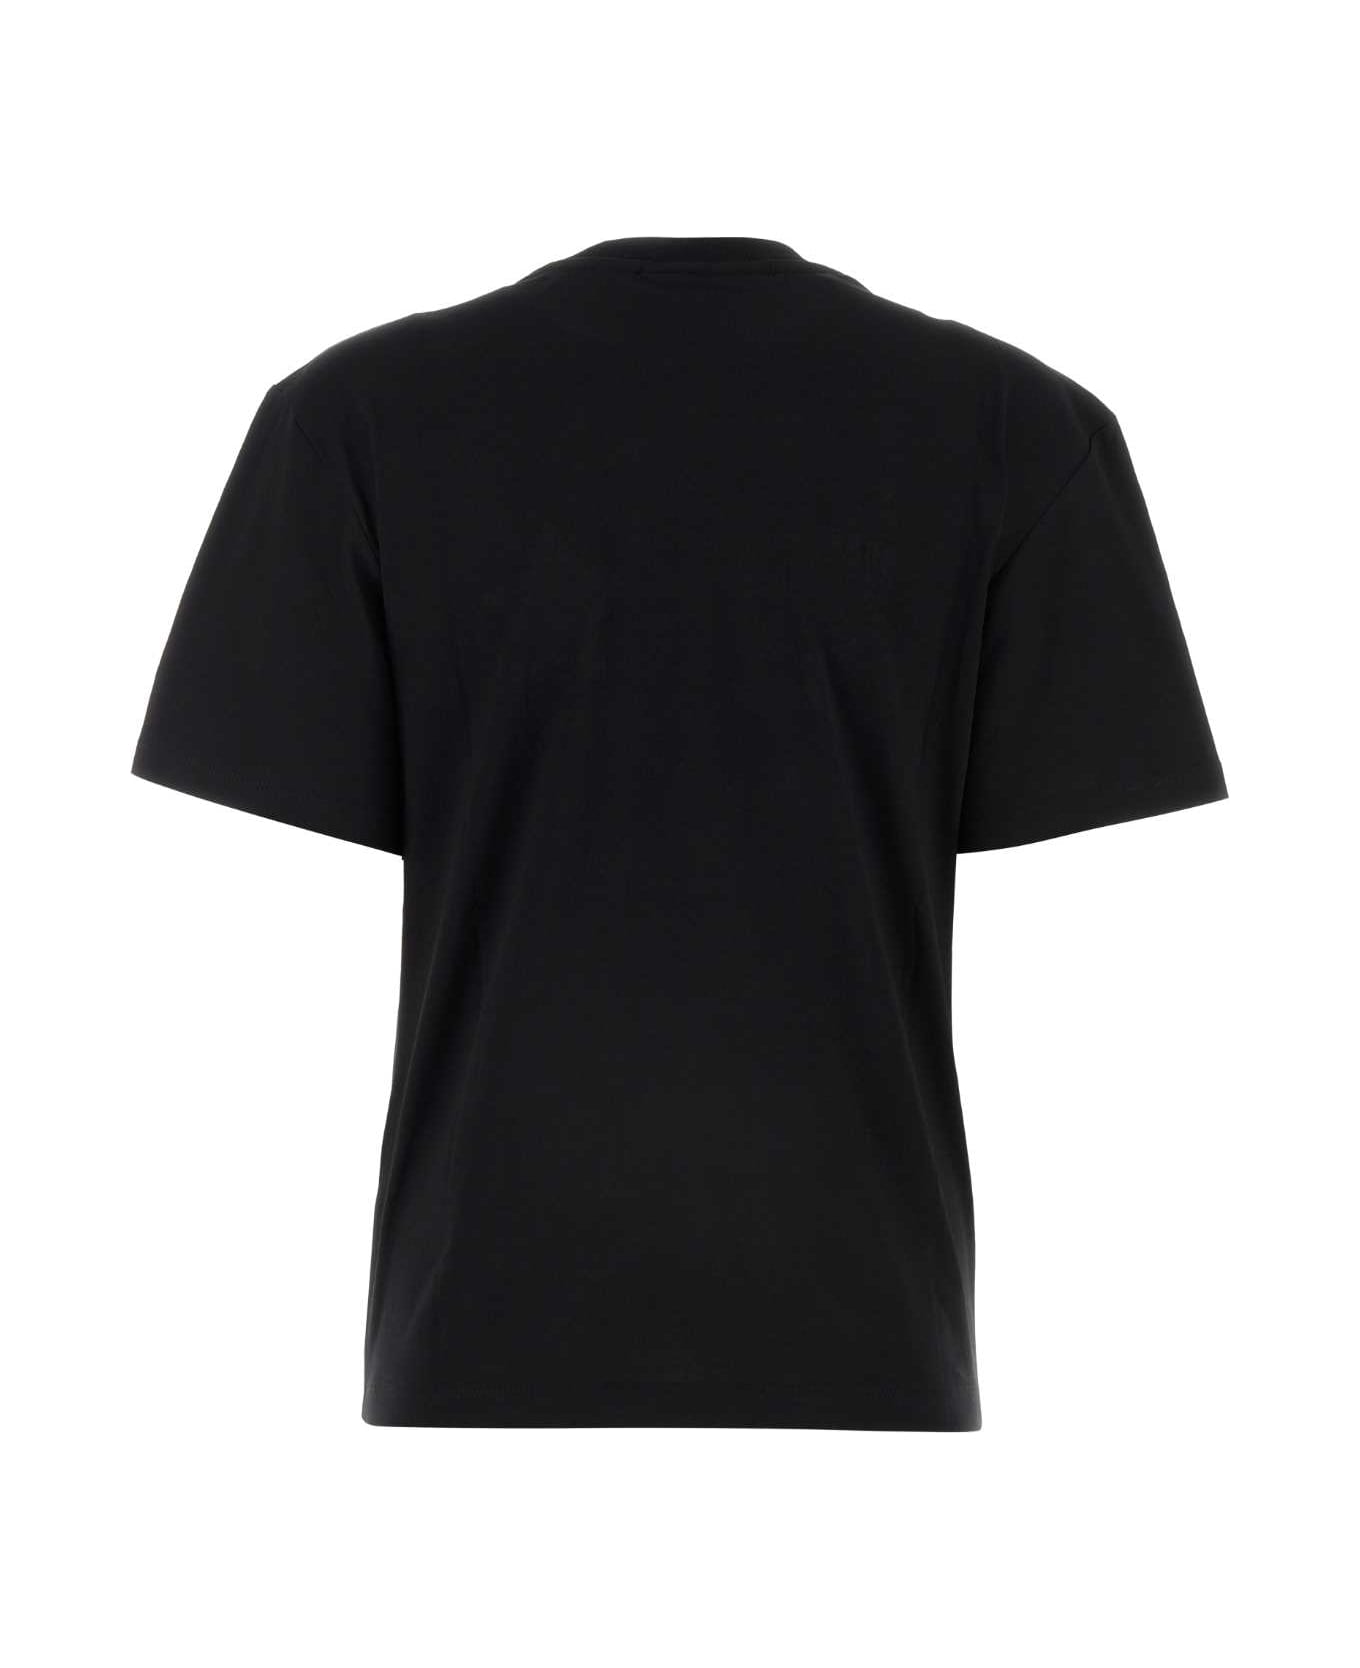 Chiara Ferragni Black Cotton T-shirt - Black